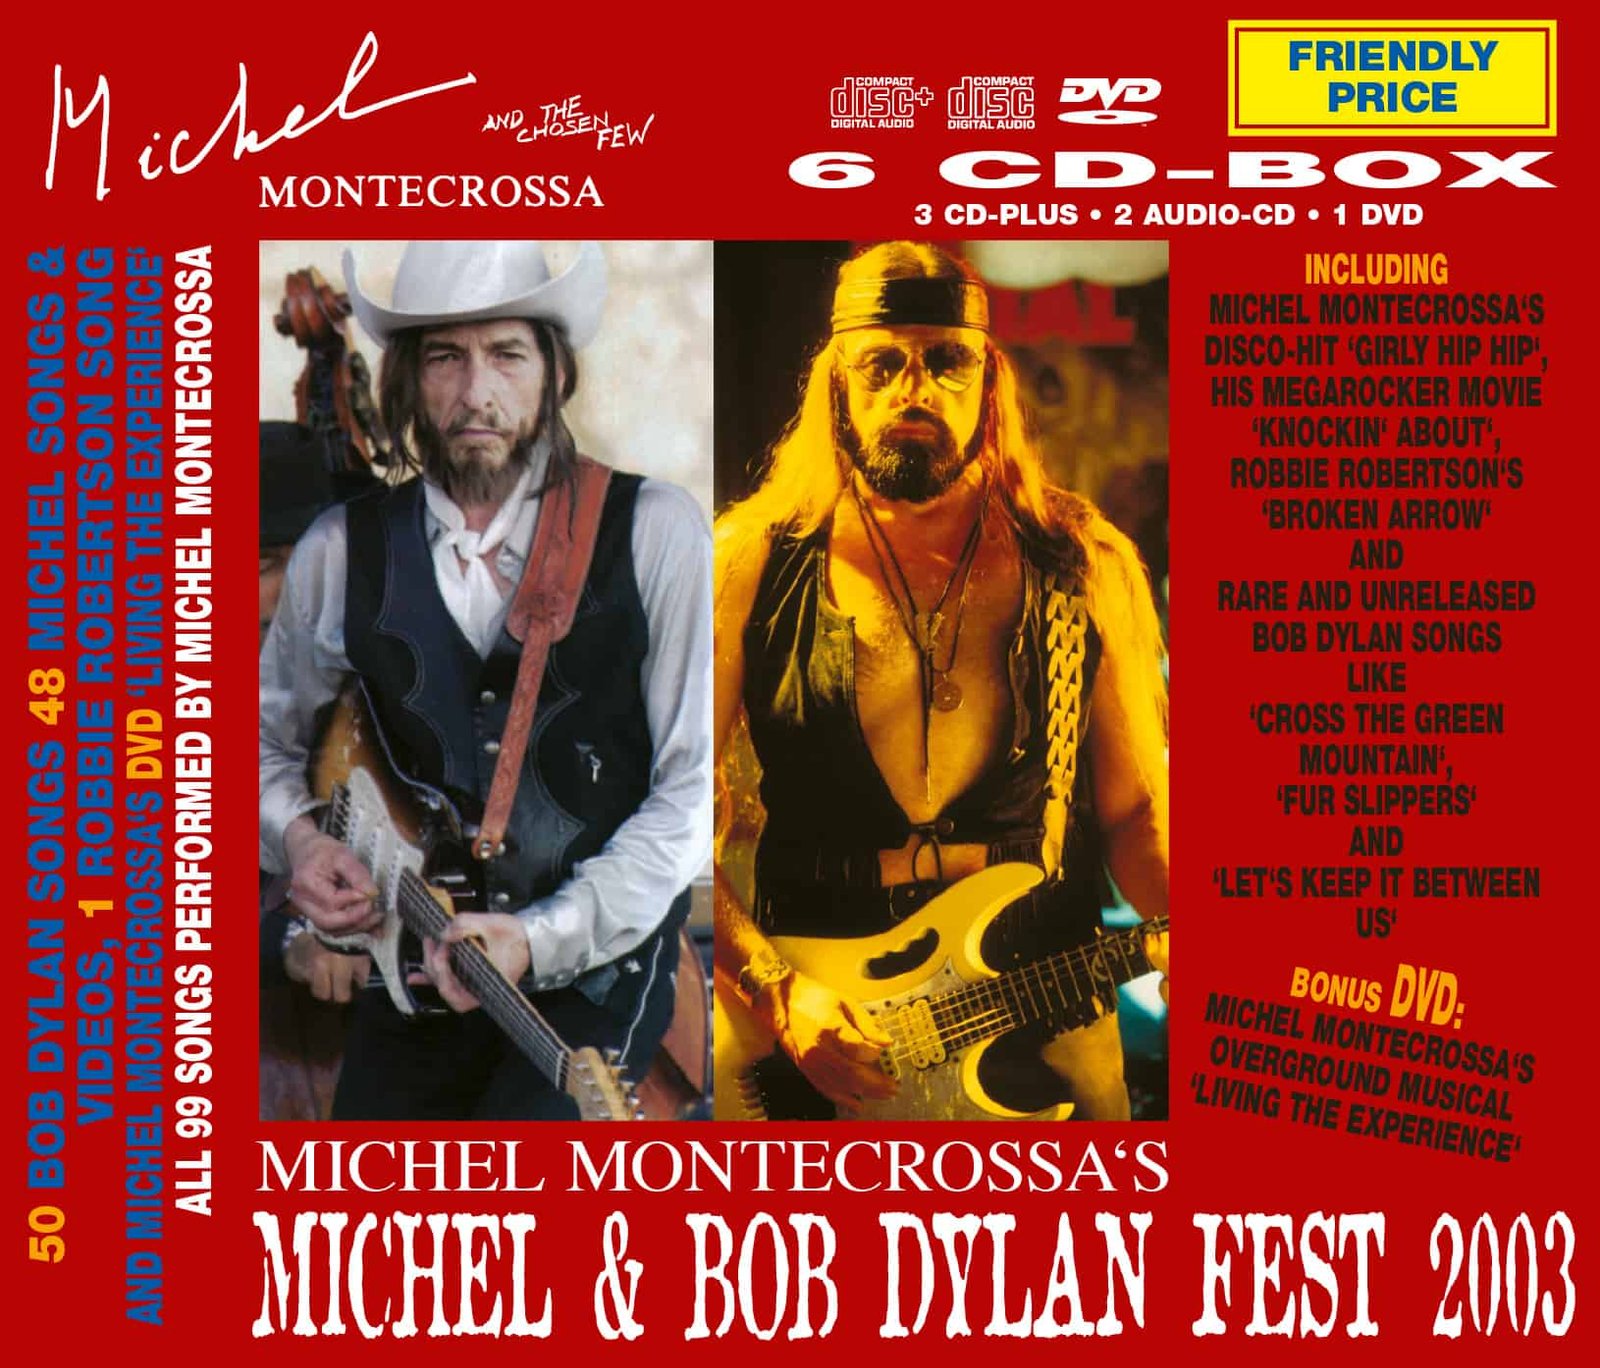 Michel Montecrossa's Michel & Bob Dylan Fest 2003